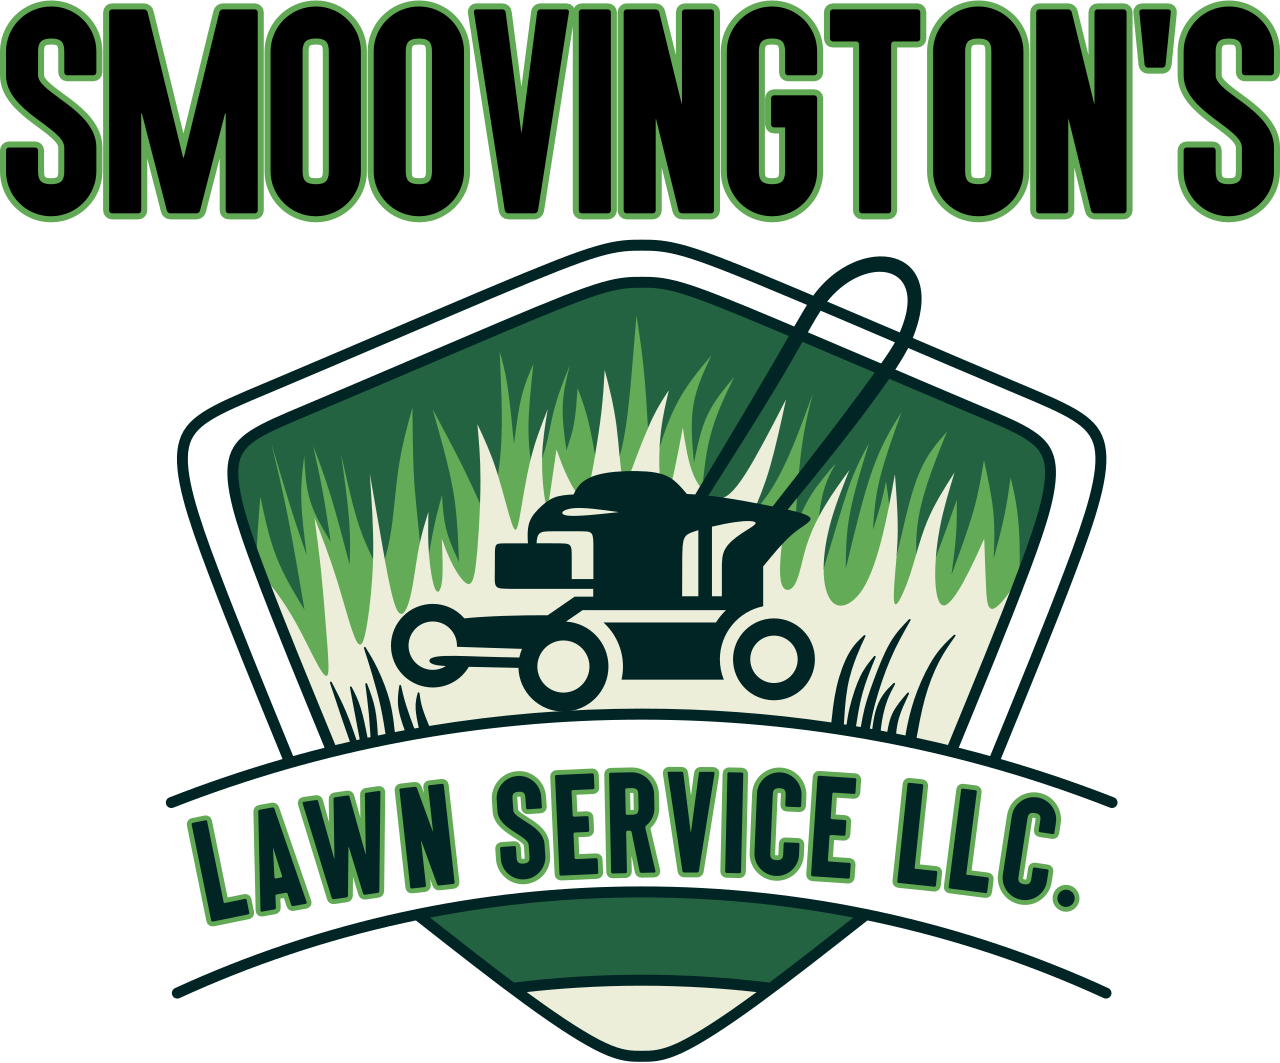 Smoovington’s Lawn Service LLC.'s logo